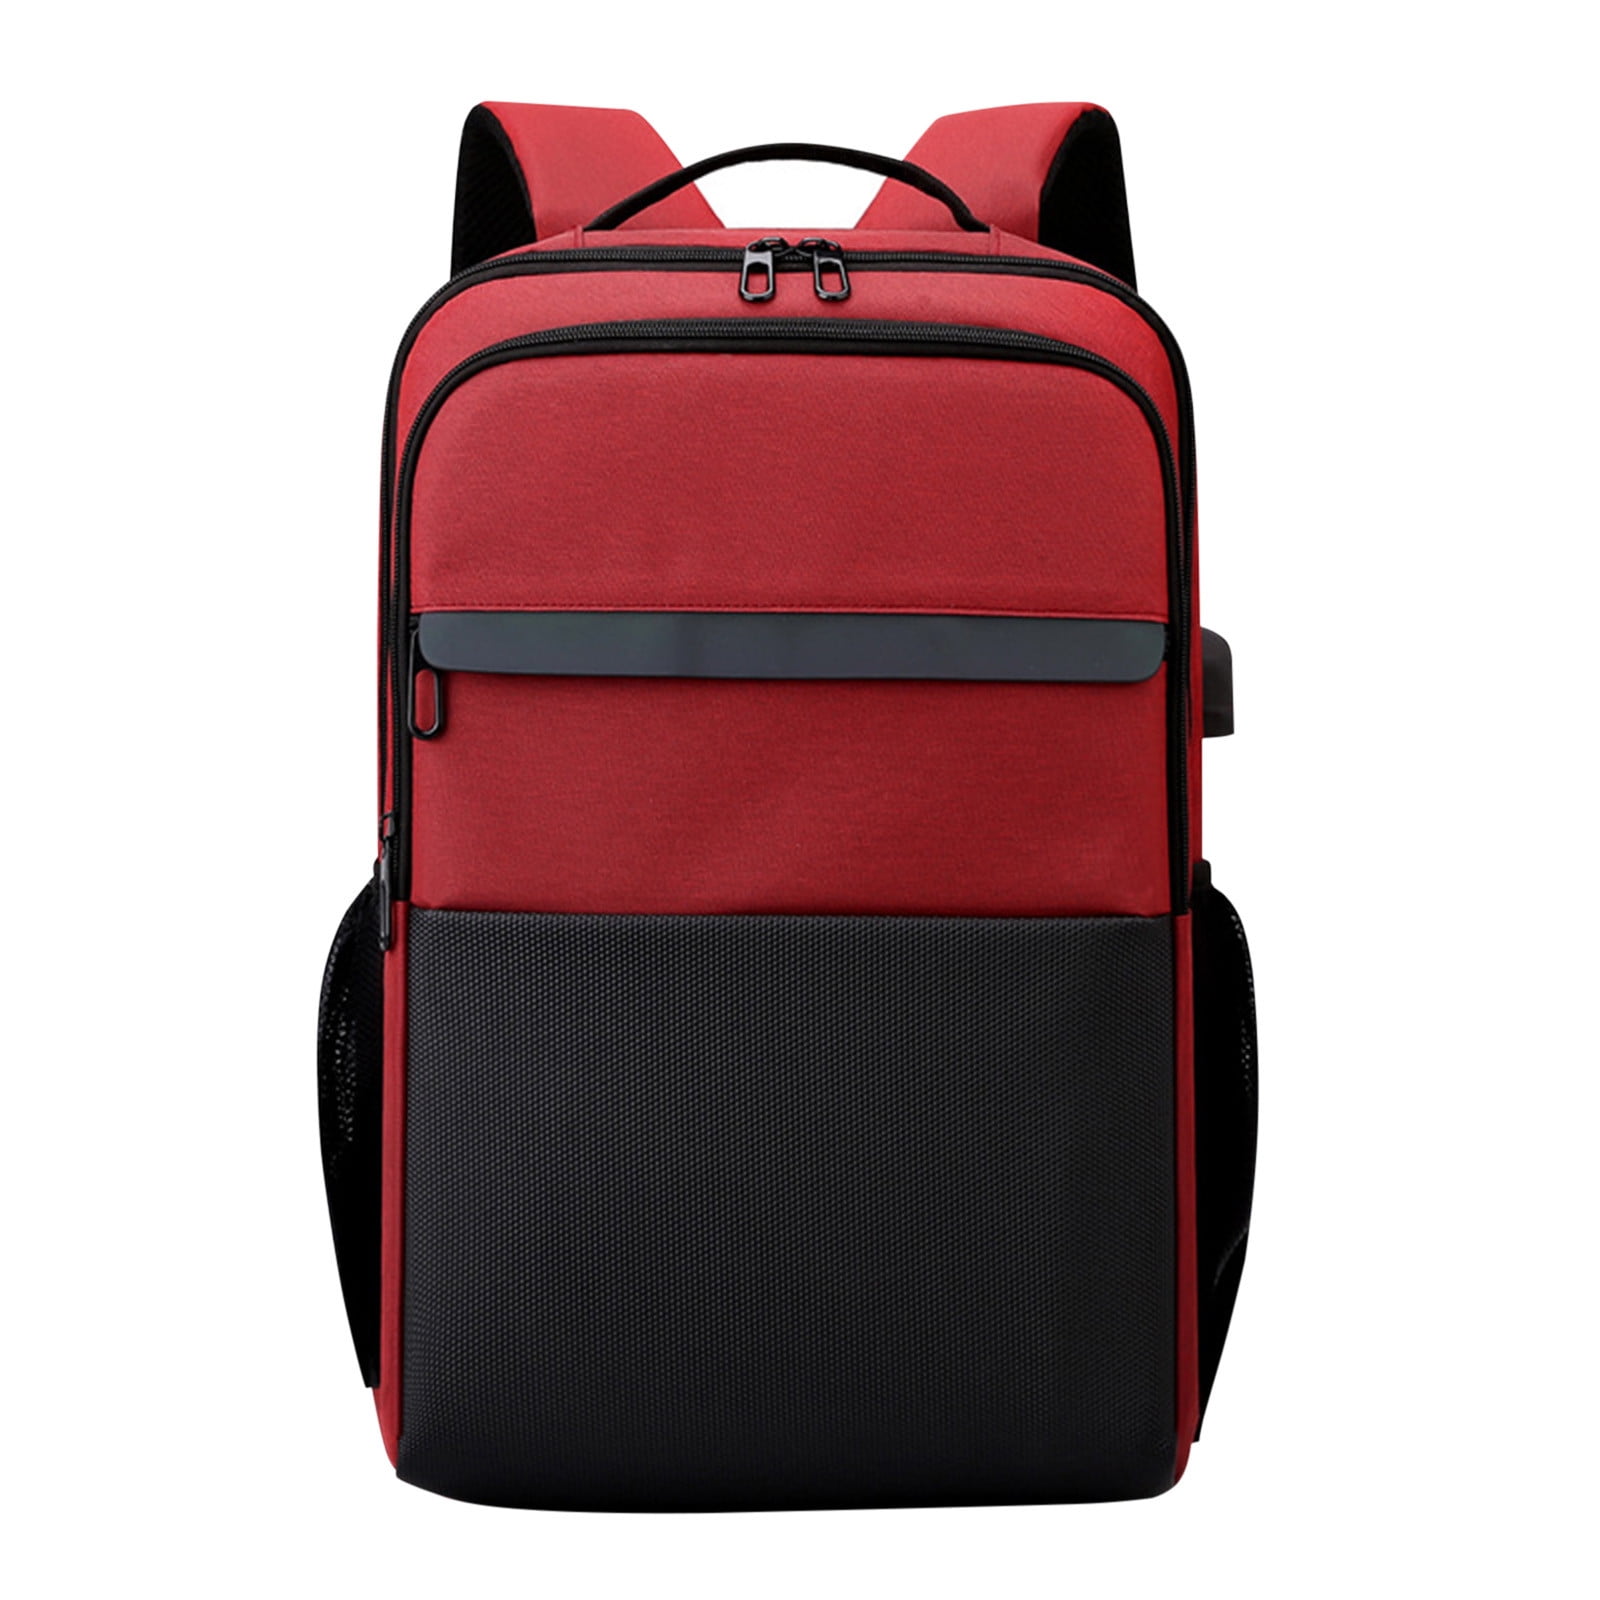 Tuphregyow Travel Laptop Backpack,Large Backpacks Water Resistant ...